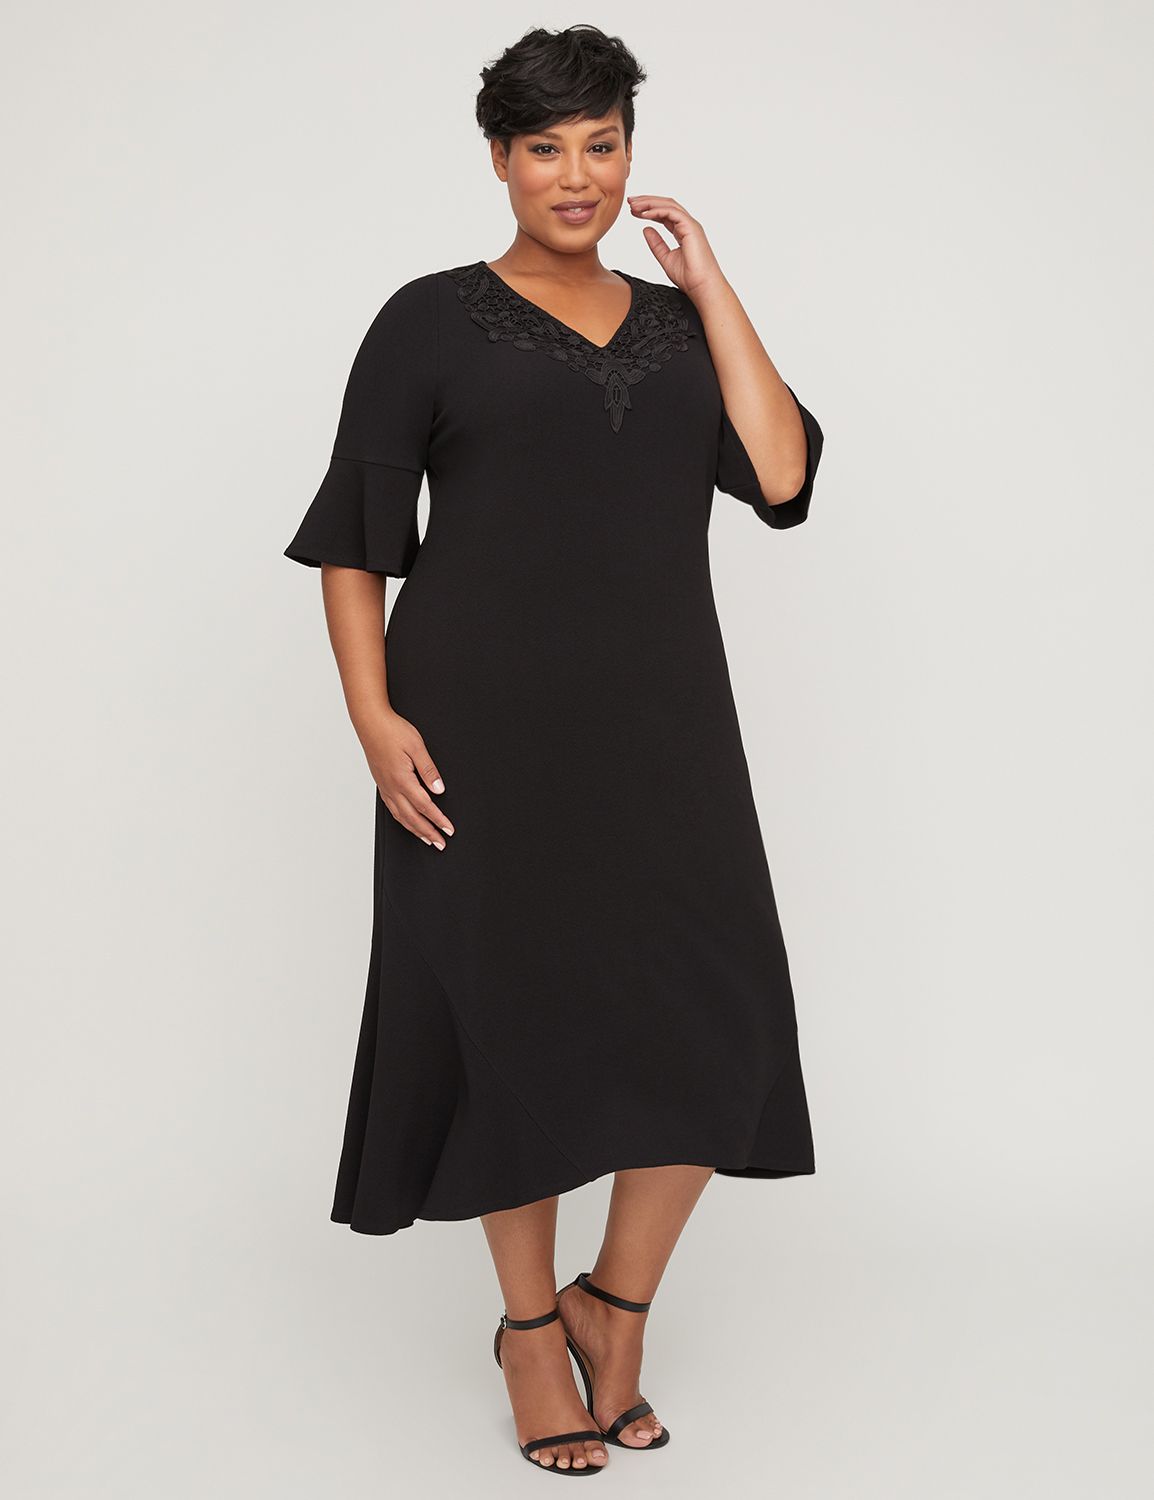 Plus Size Dresses – Maxi, Jacket Dresses & More | Catherines